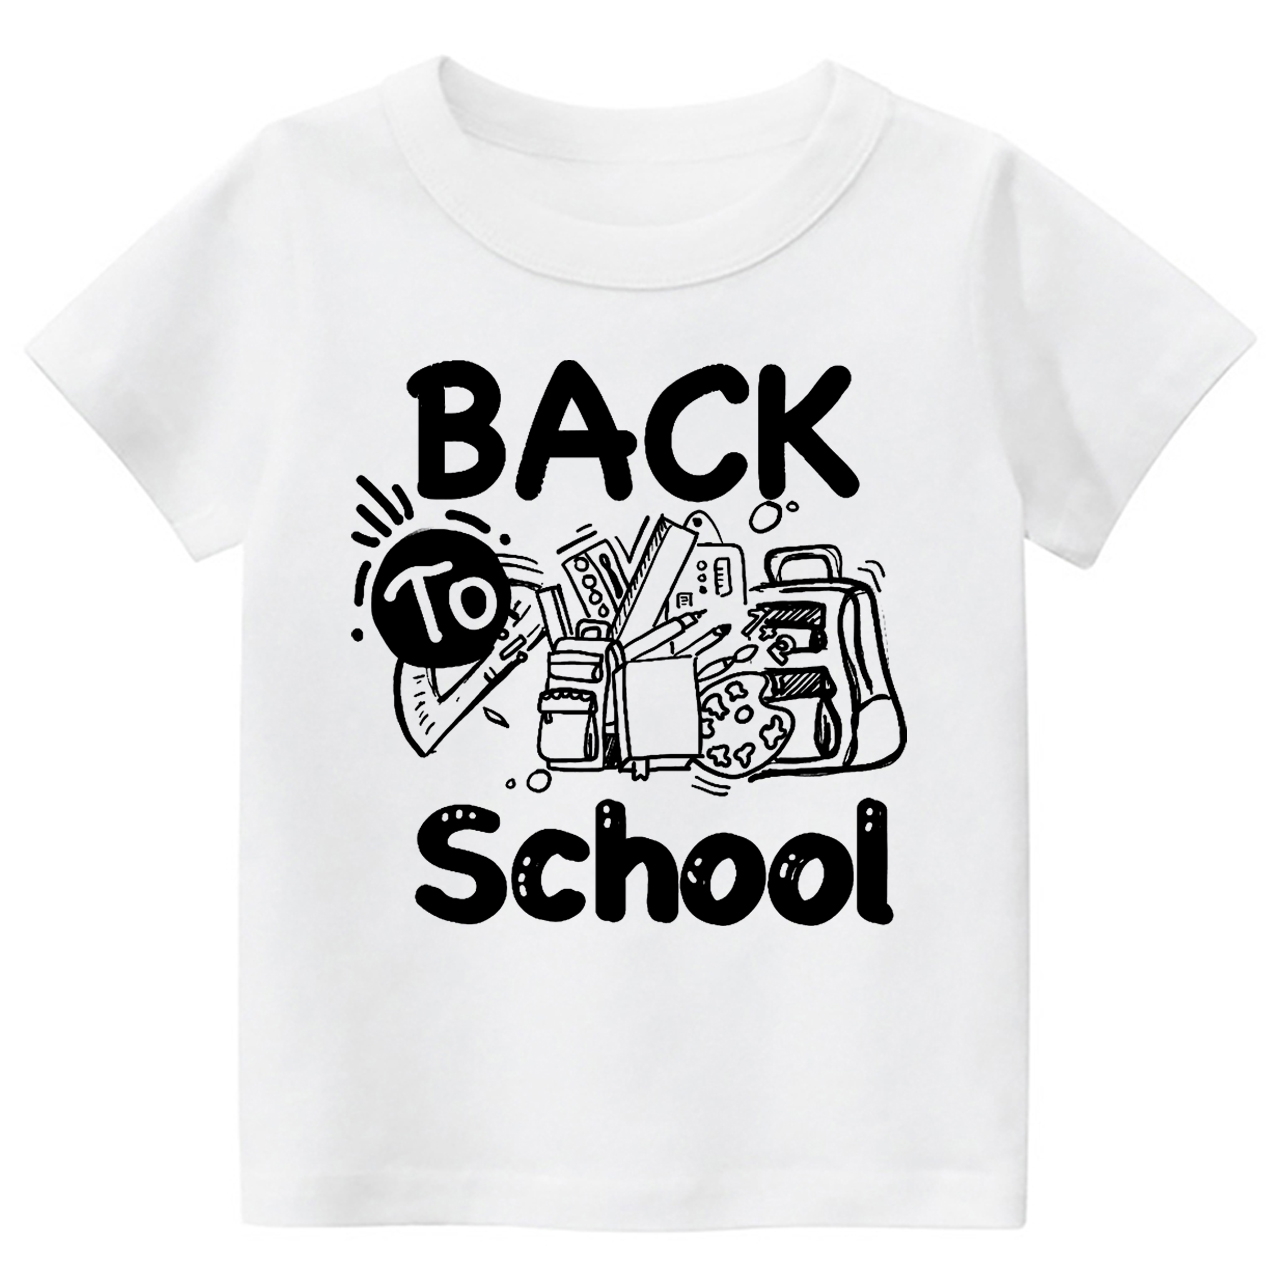 Back to School - Kids Shirts